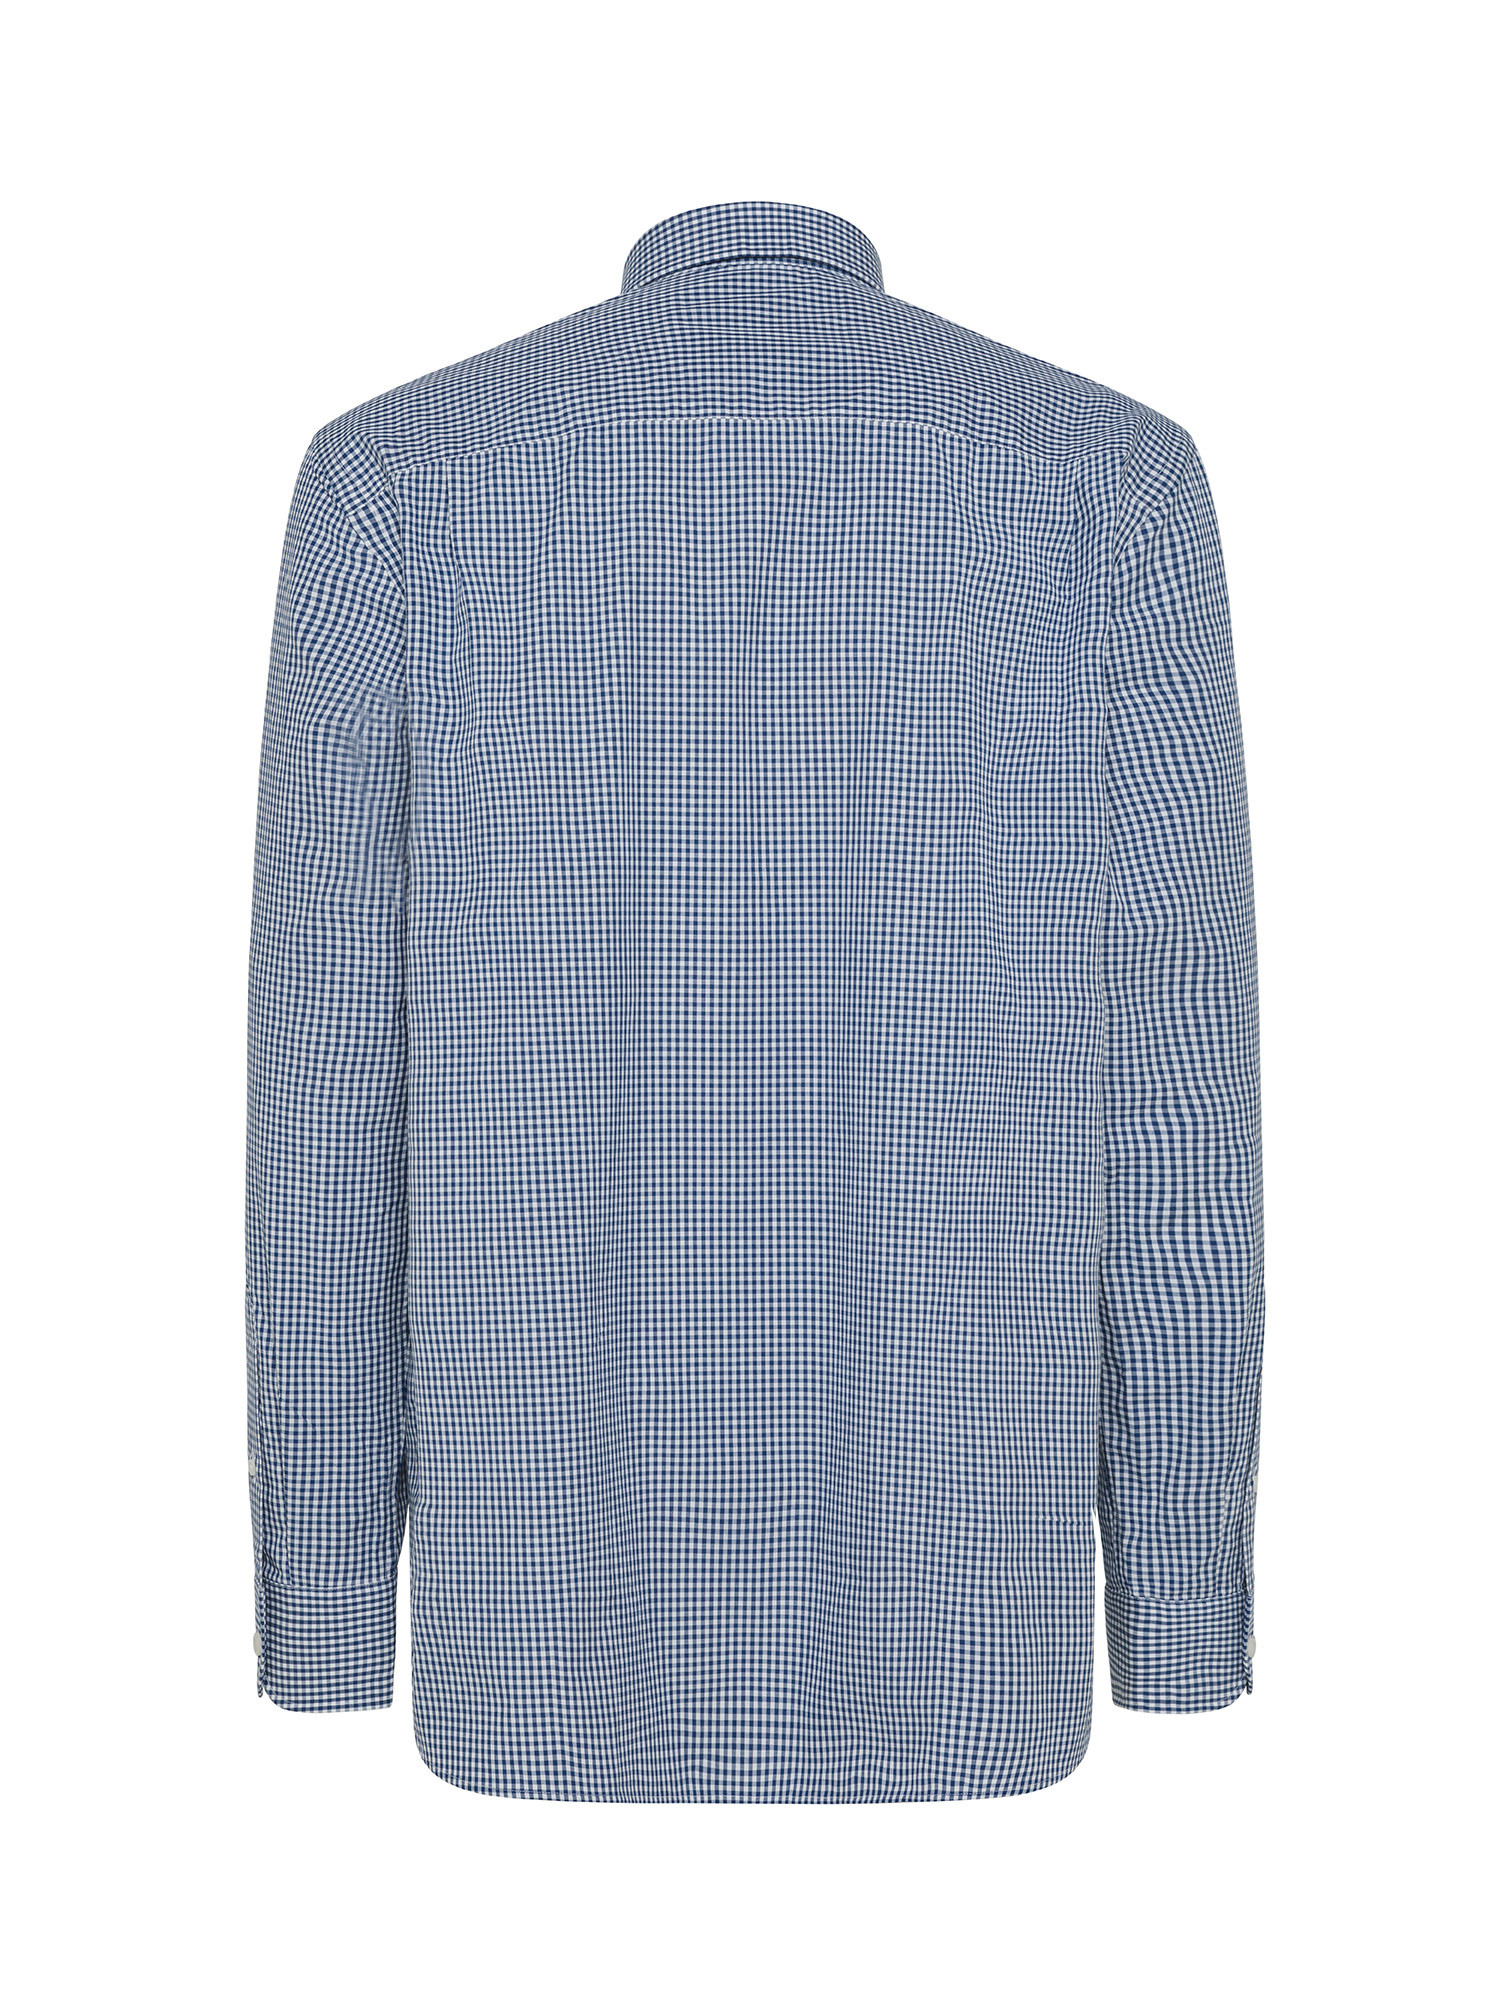 Luca D'Altieri - Camicia regular fit in puro cotone, Blu, large image number 1